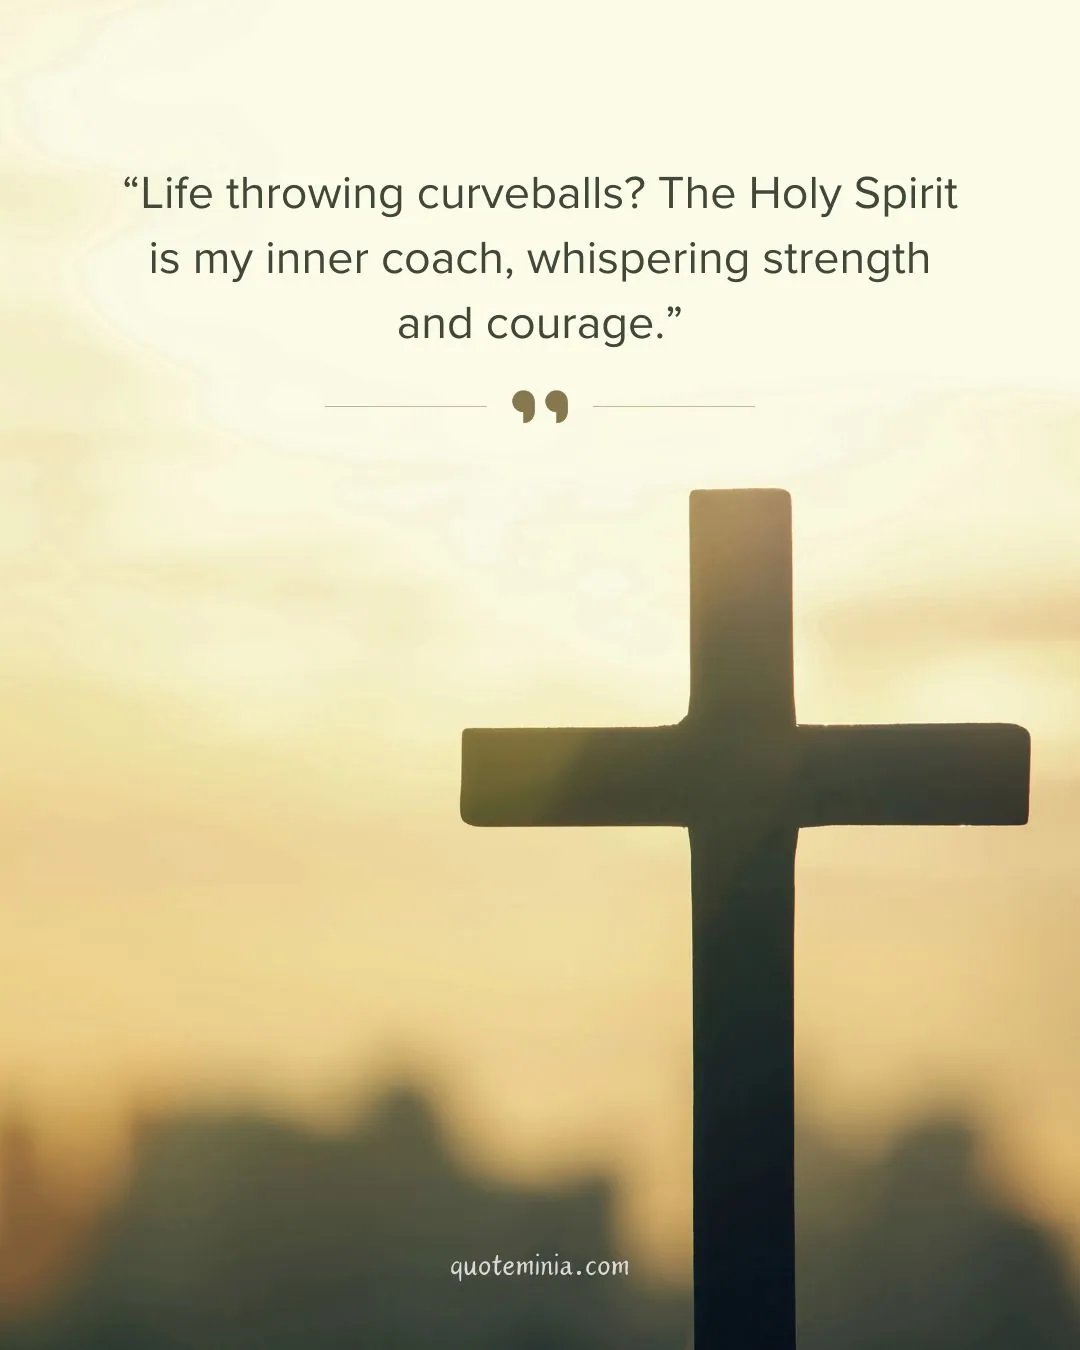 Holy Spirit Quotes Bible image